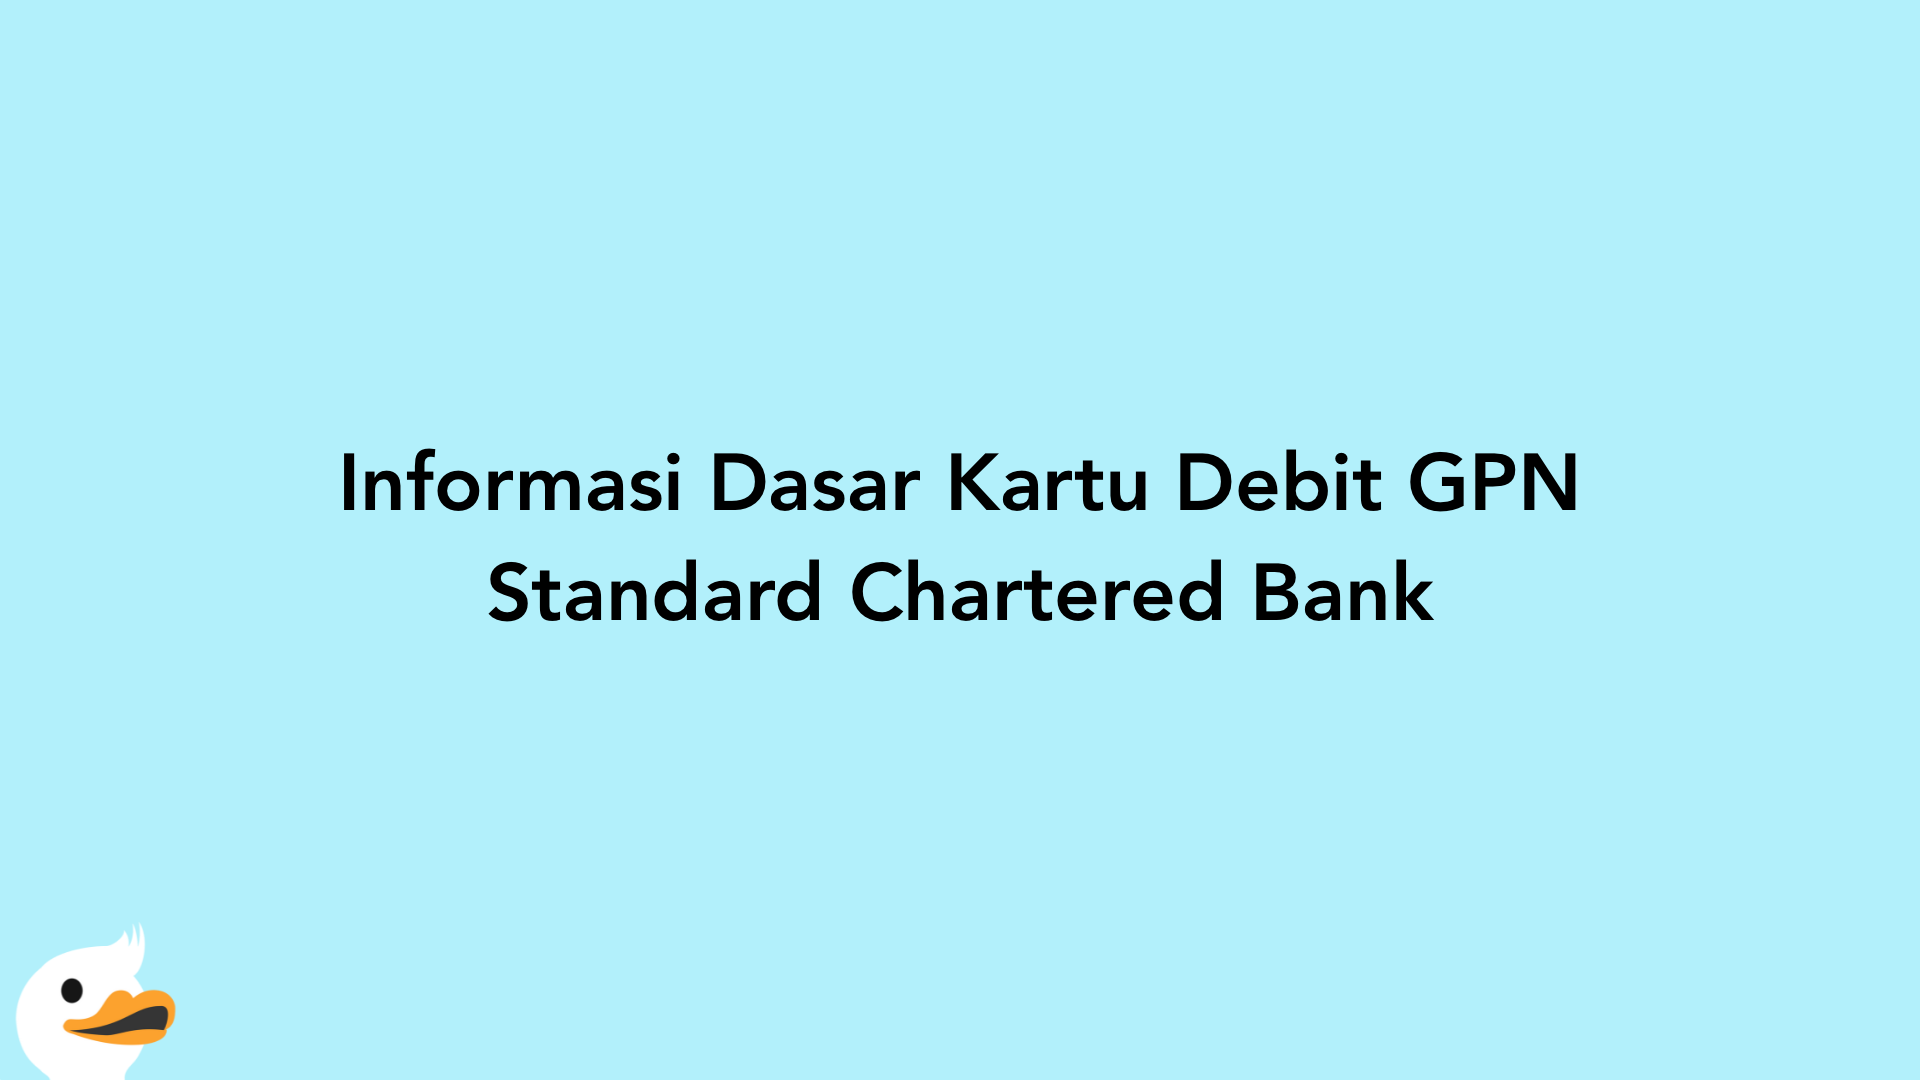 Informasi Dasar Kartu Debit GPN Standard Chartered Bank